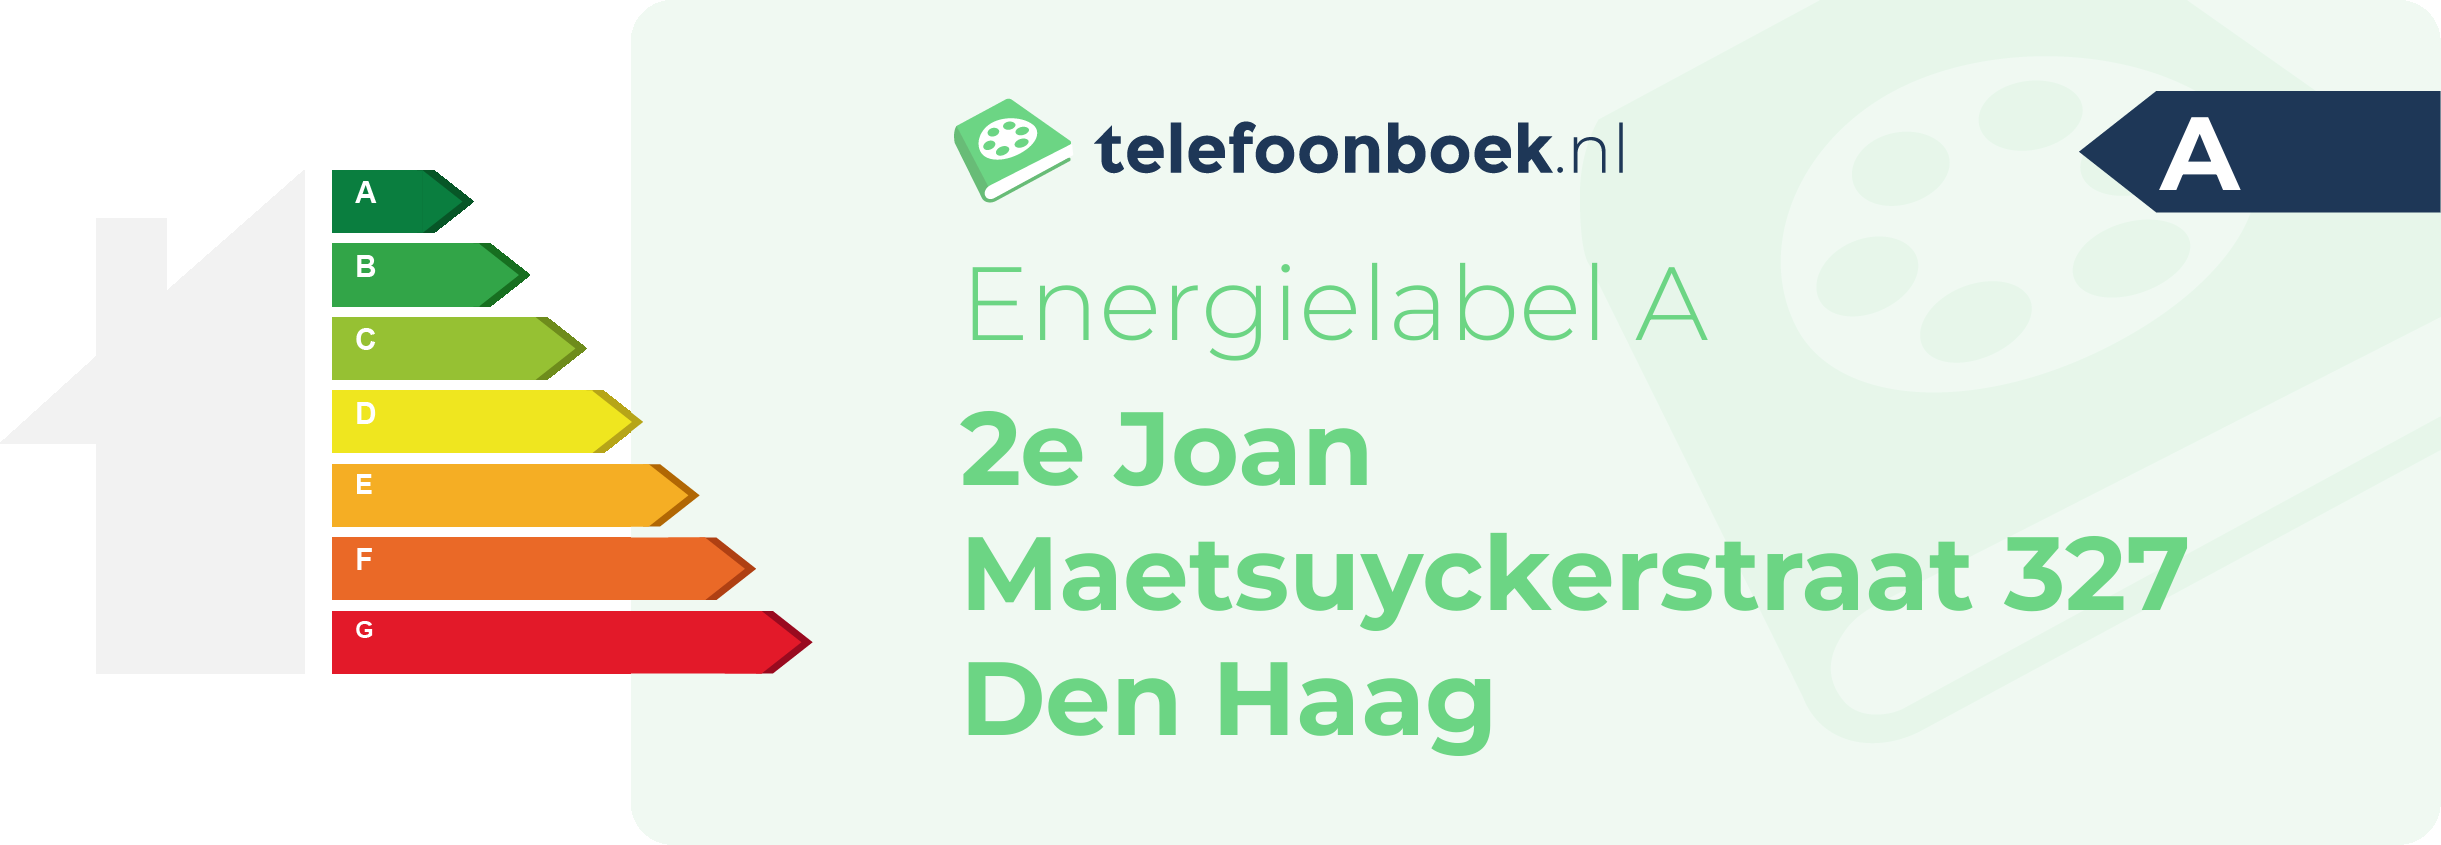 Energielabel 2e Joan Maetsuyckerstraat 327 Den Haag